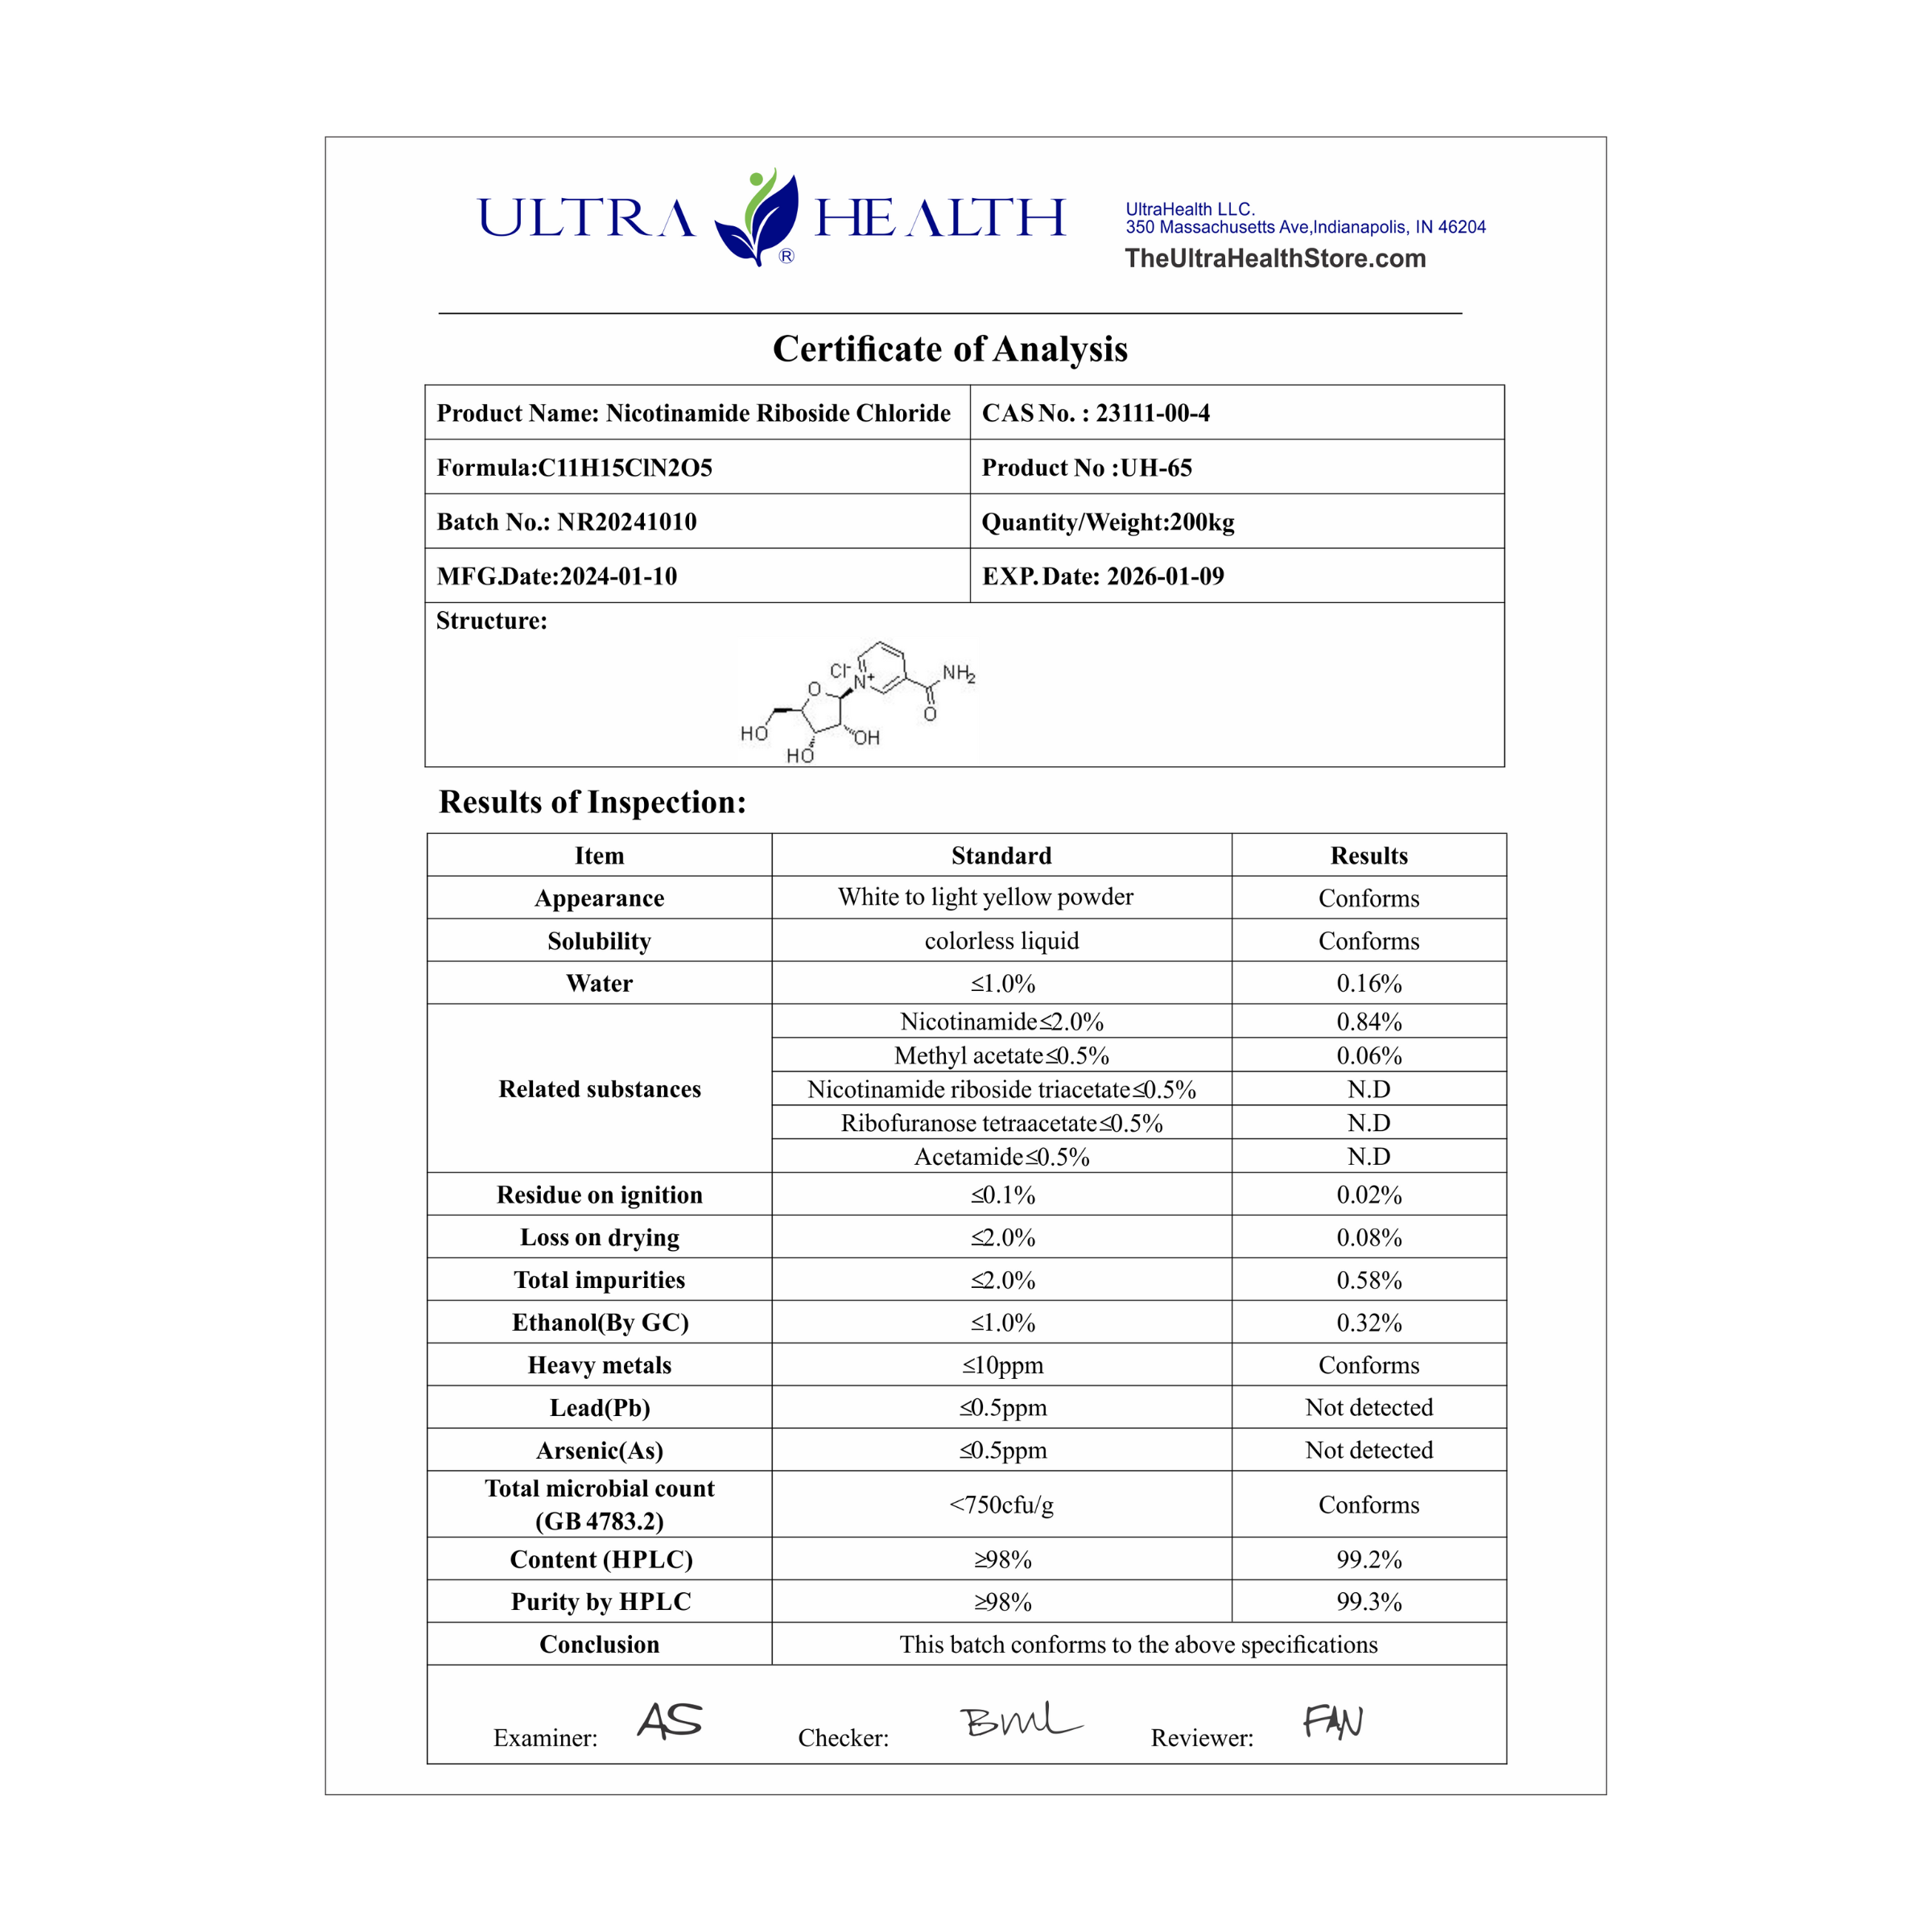 NR 60B ENTERIC (100%  RiboGEN™) - Ultra-Purity Pharmaceutical Grade Nicotinamide Riboside - 300mg